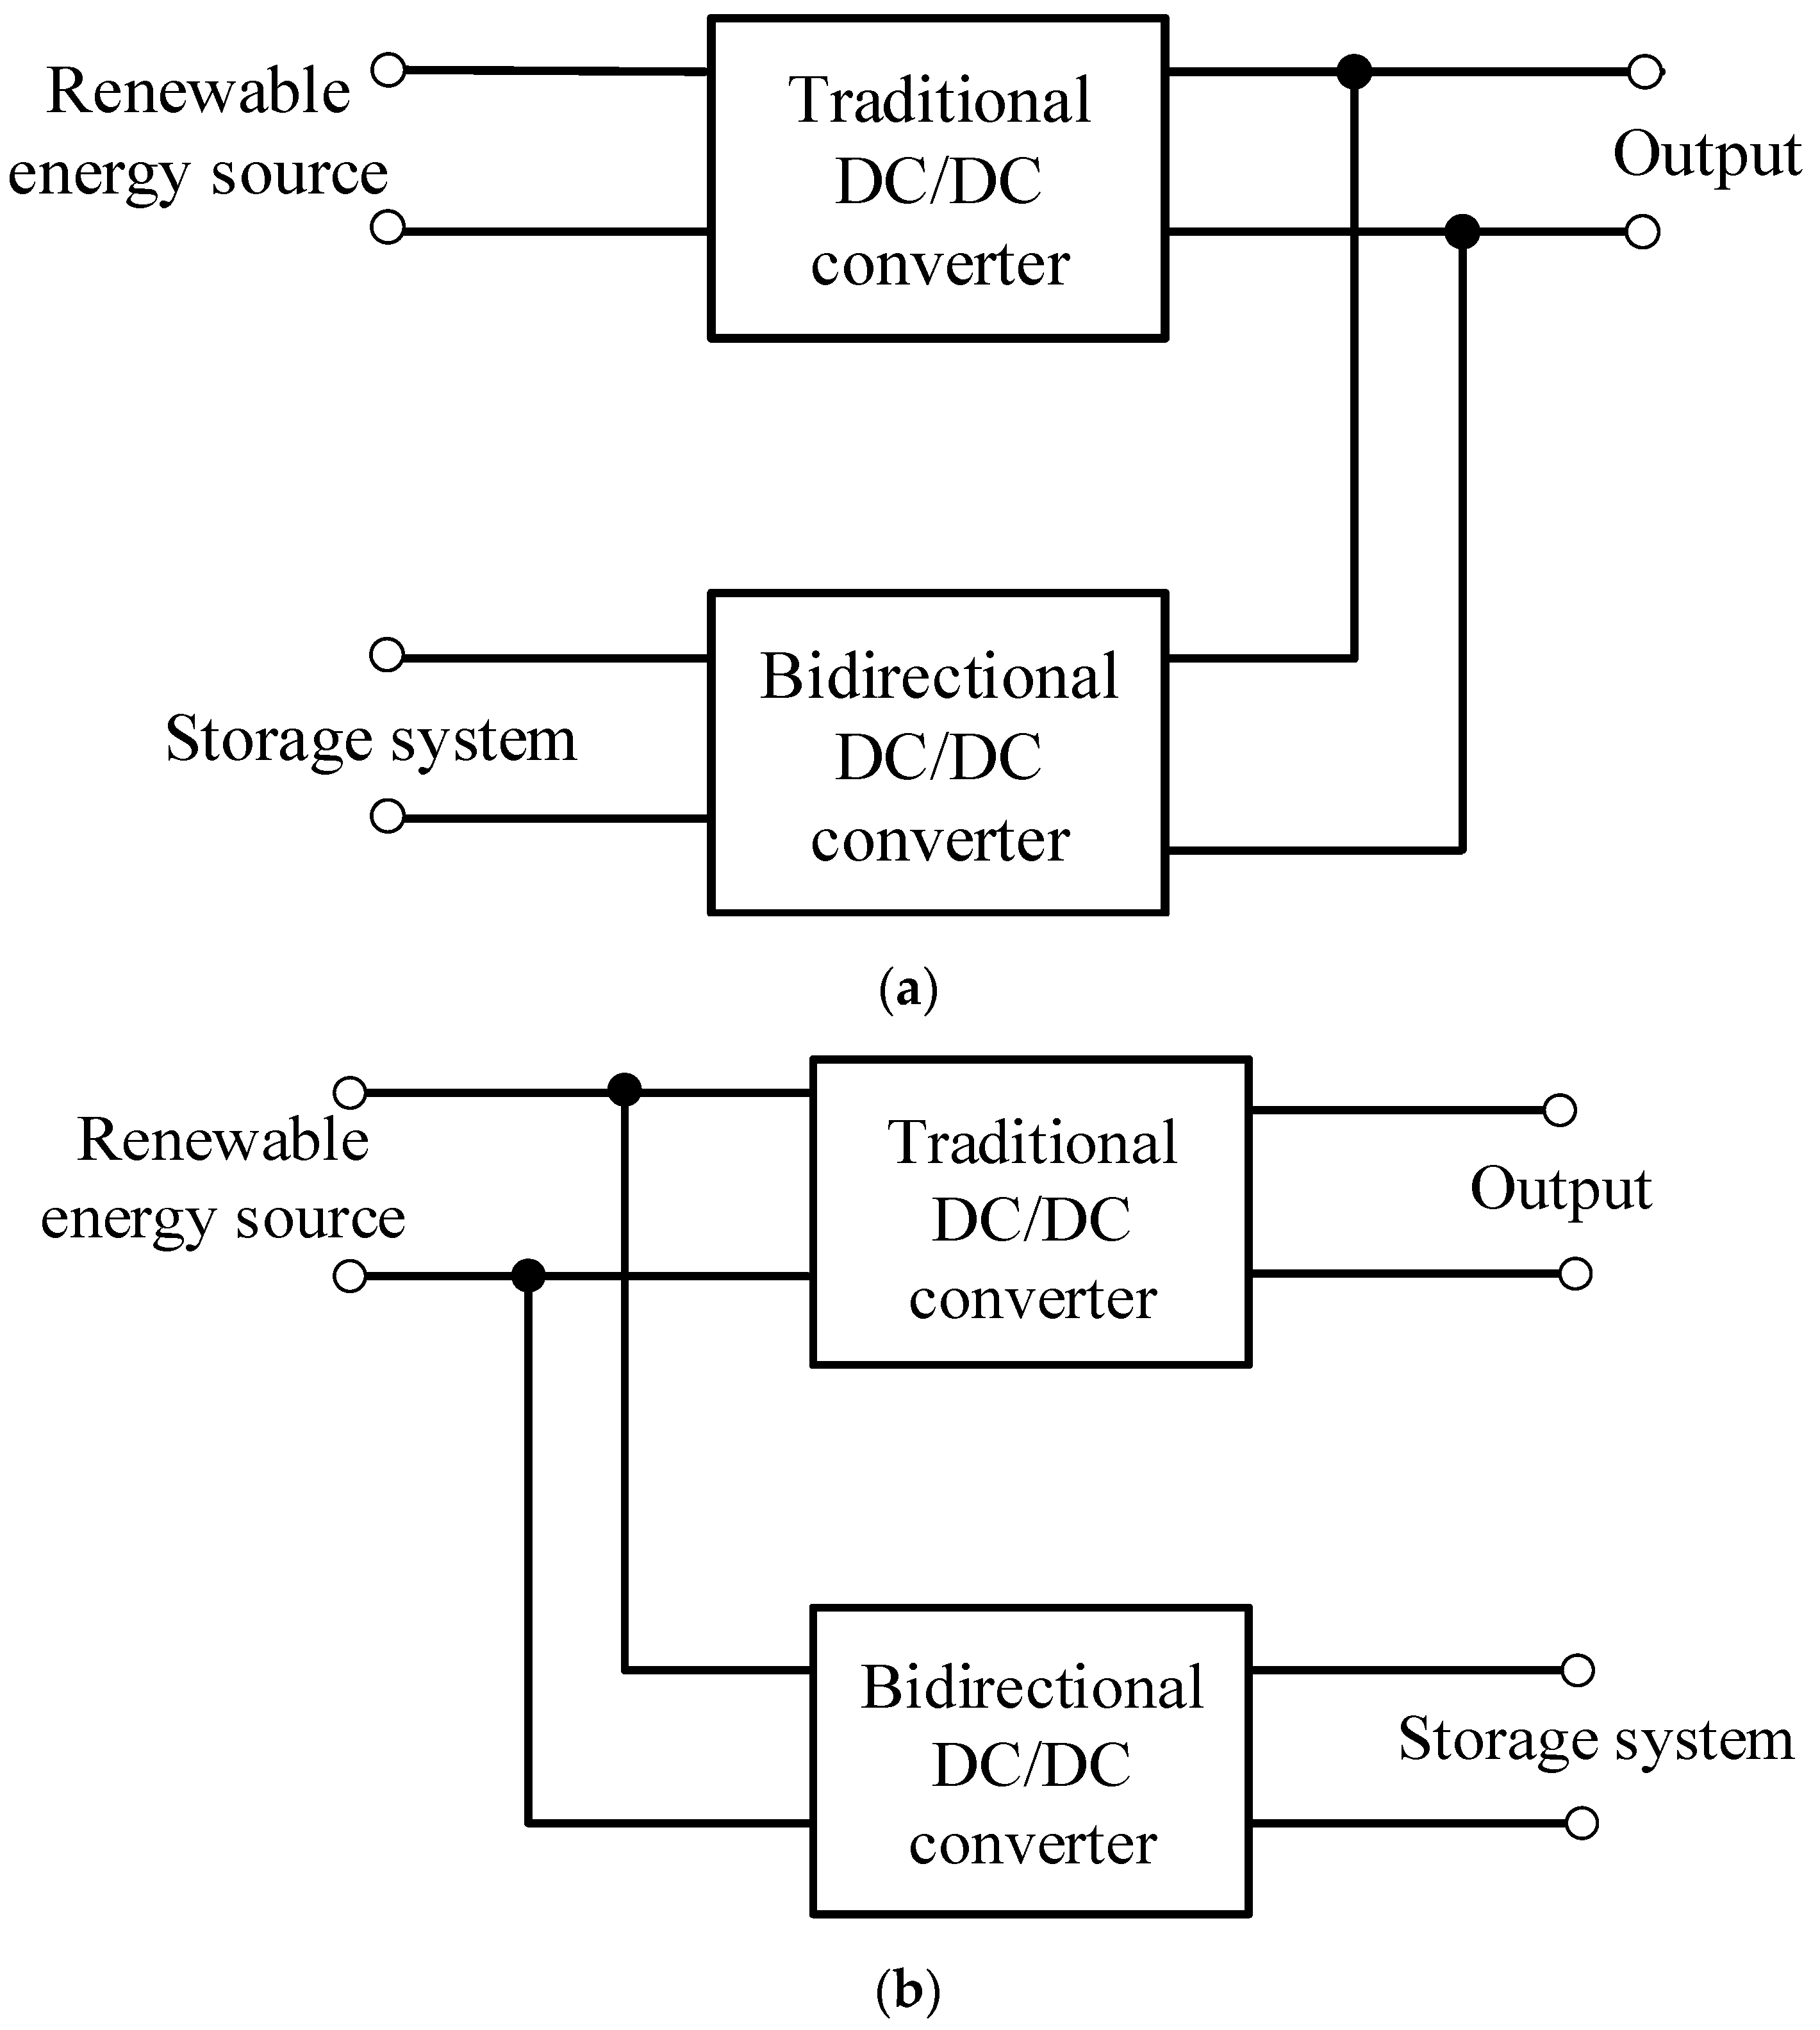 2008 ezgo rxv wiring diagram